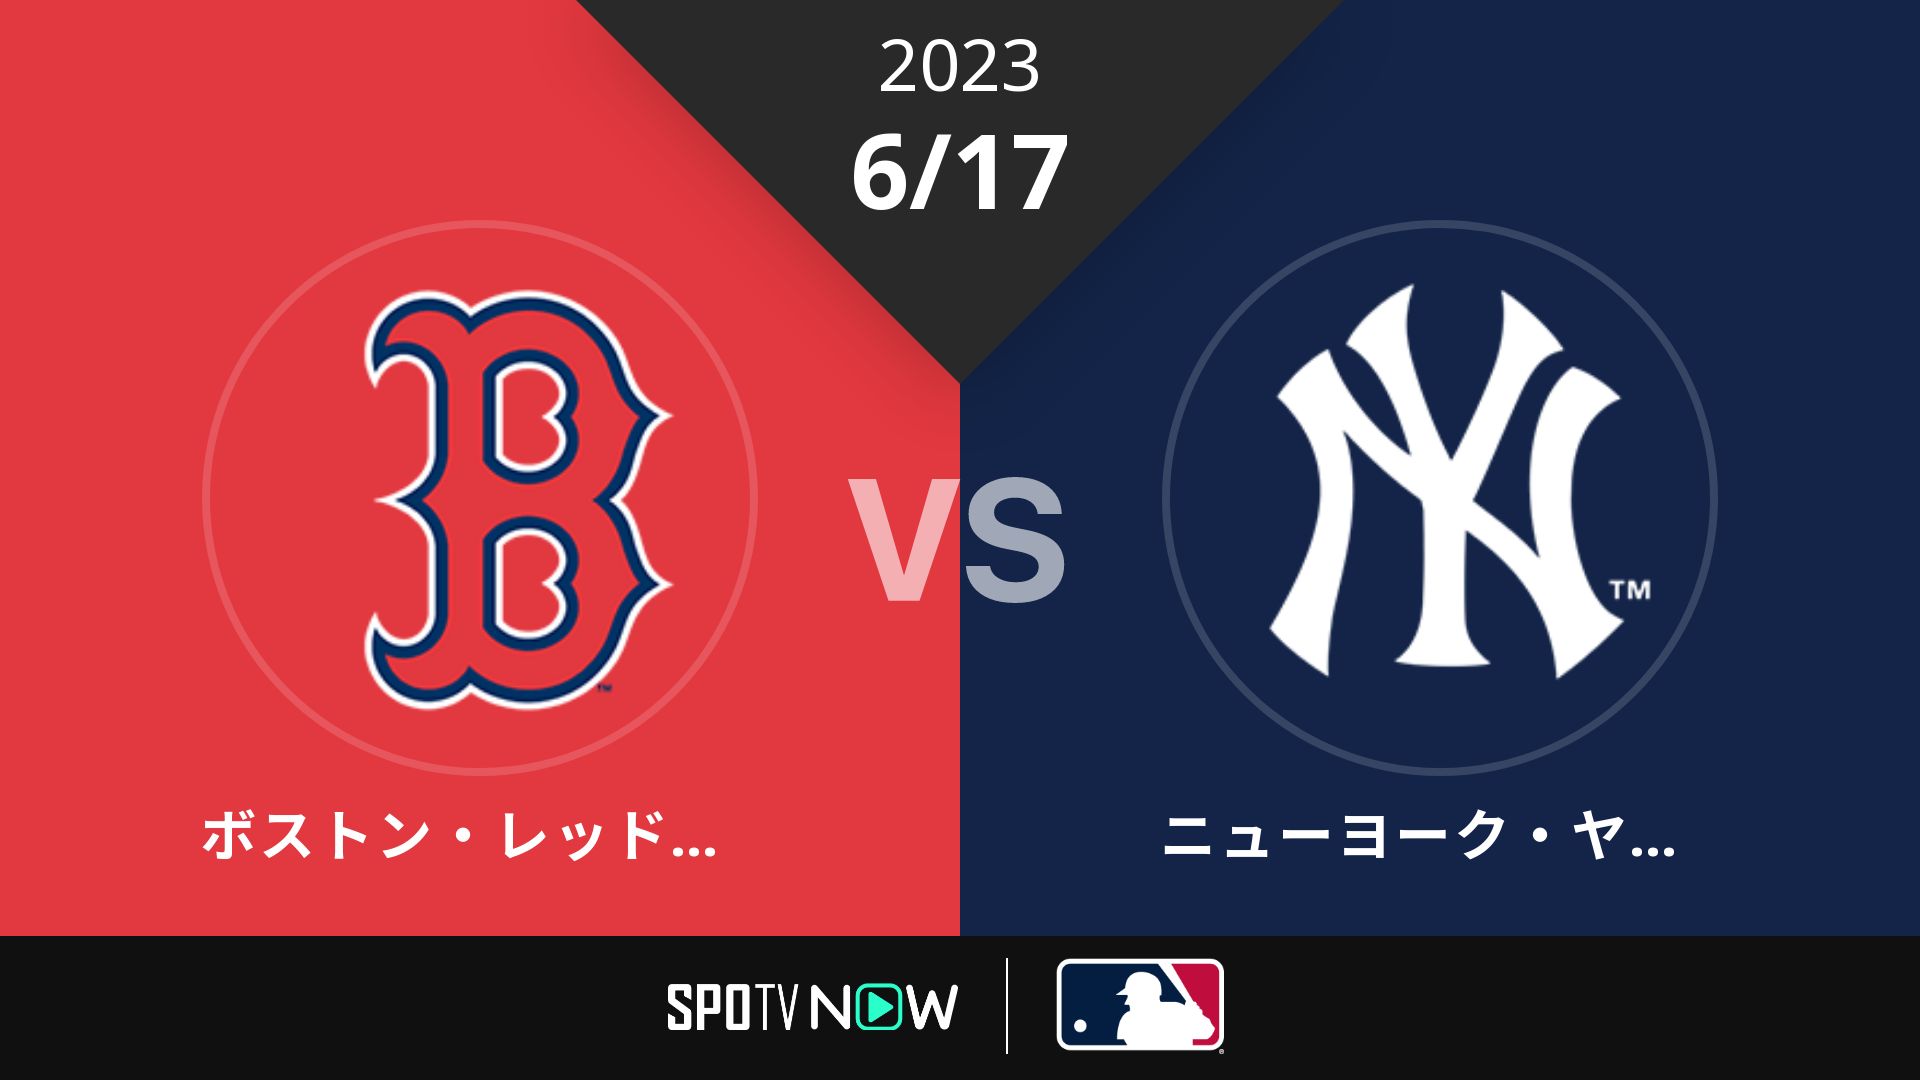 2023/6/17 Rソックス vs ヤンキース [MLB]